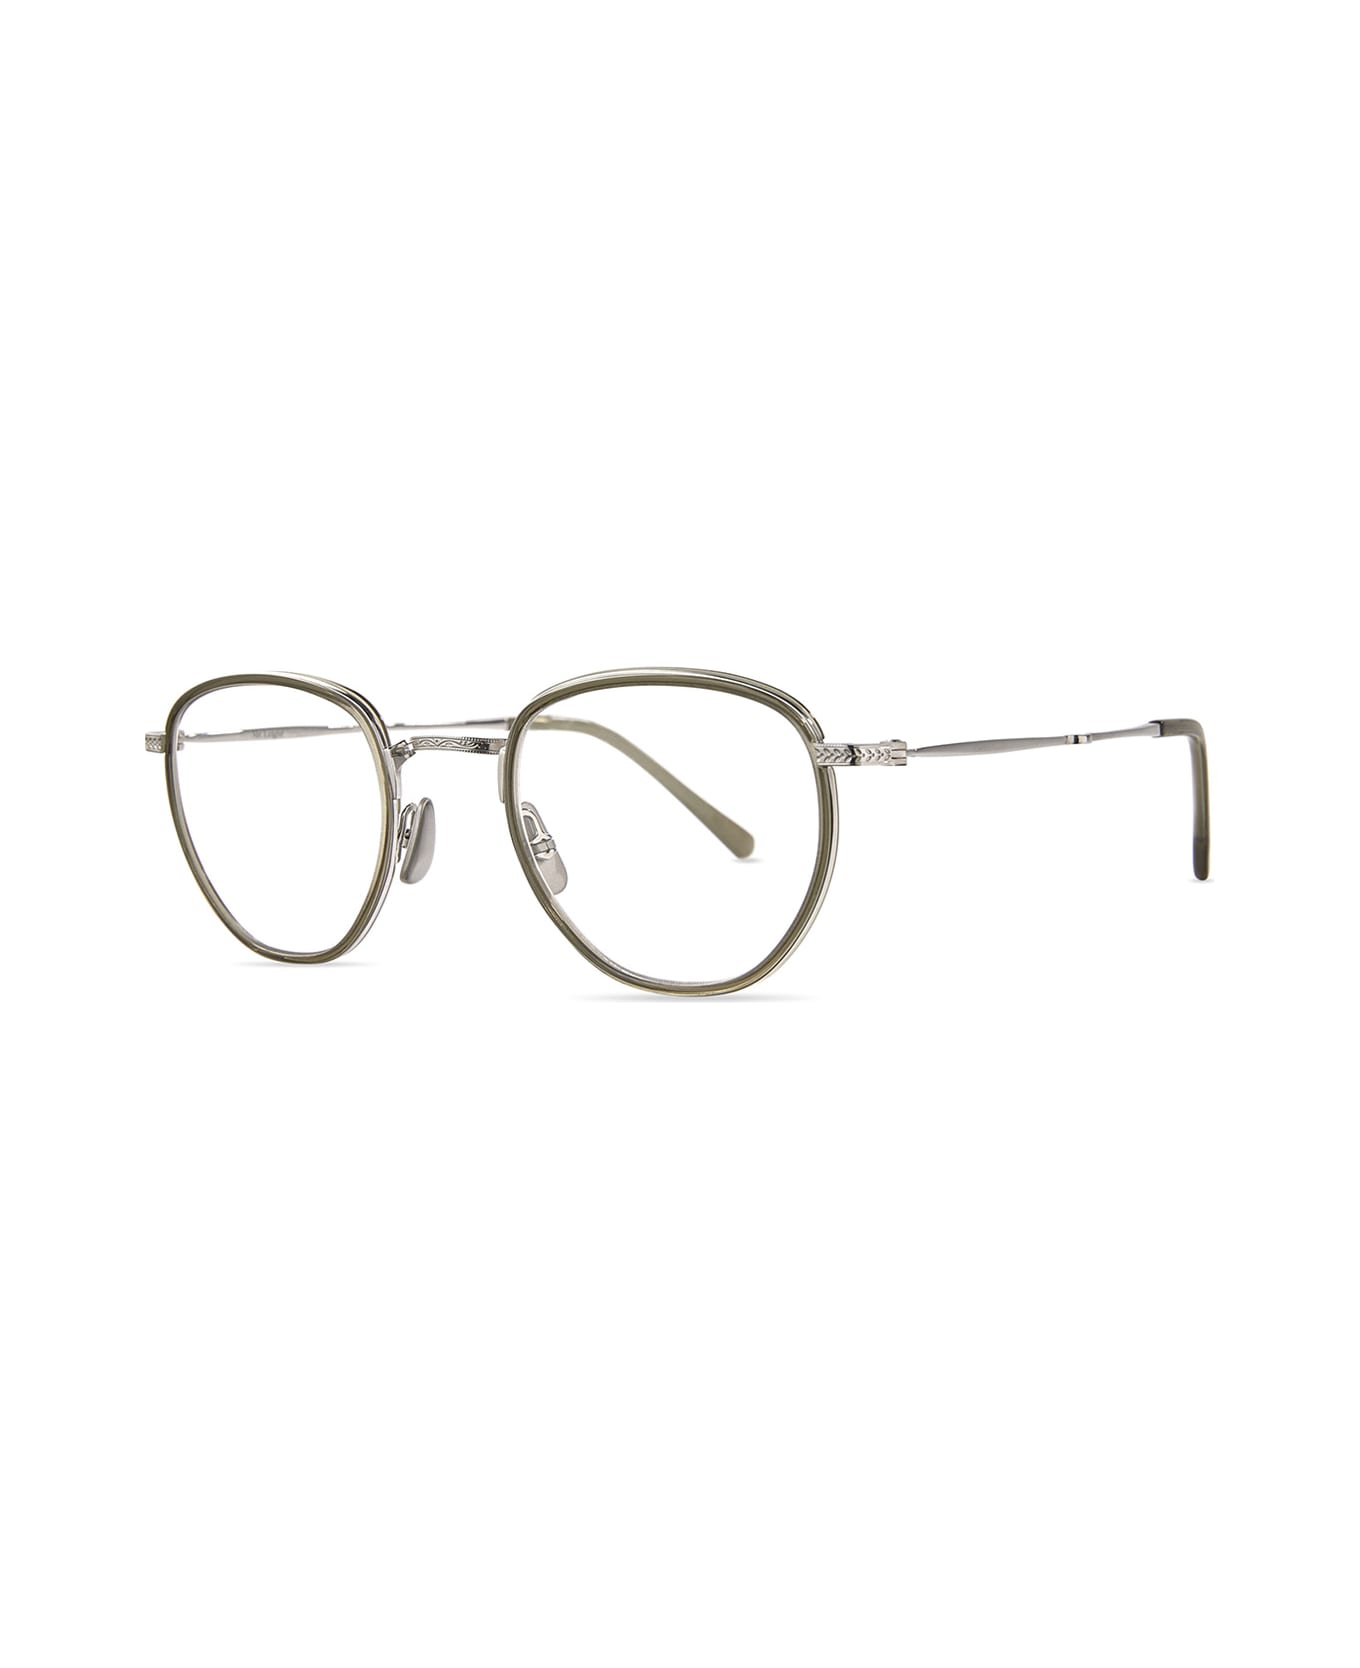 Mr. Leight Roku C Limu-platinum Glasses - Limu-Platinum アイウェア